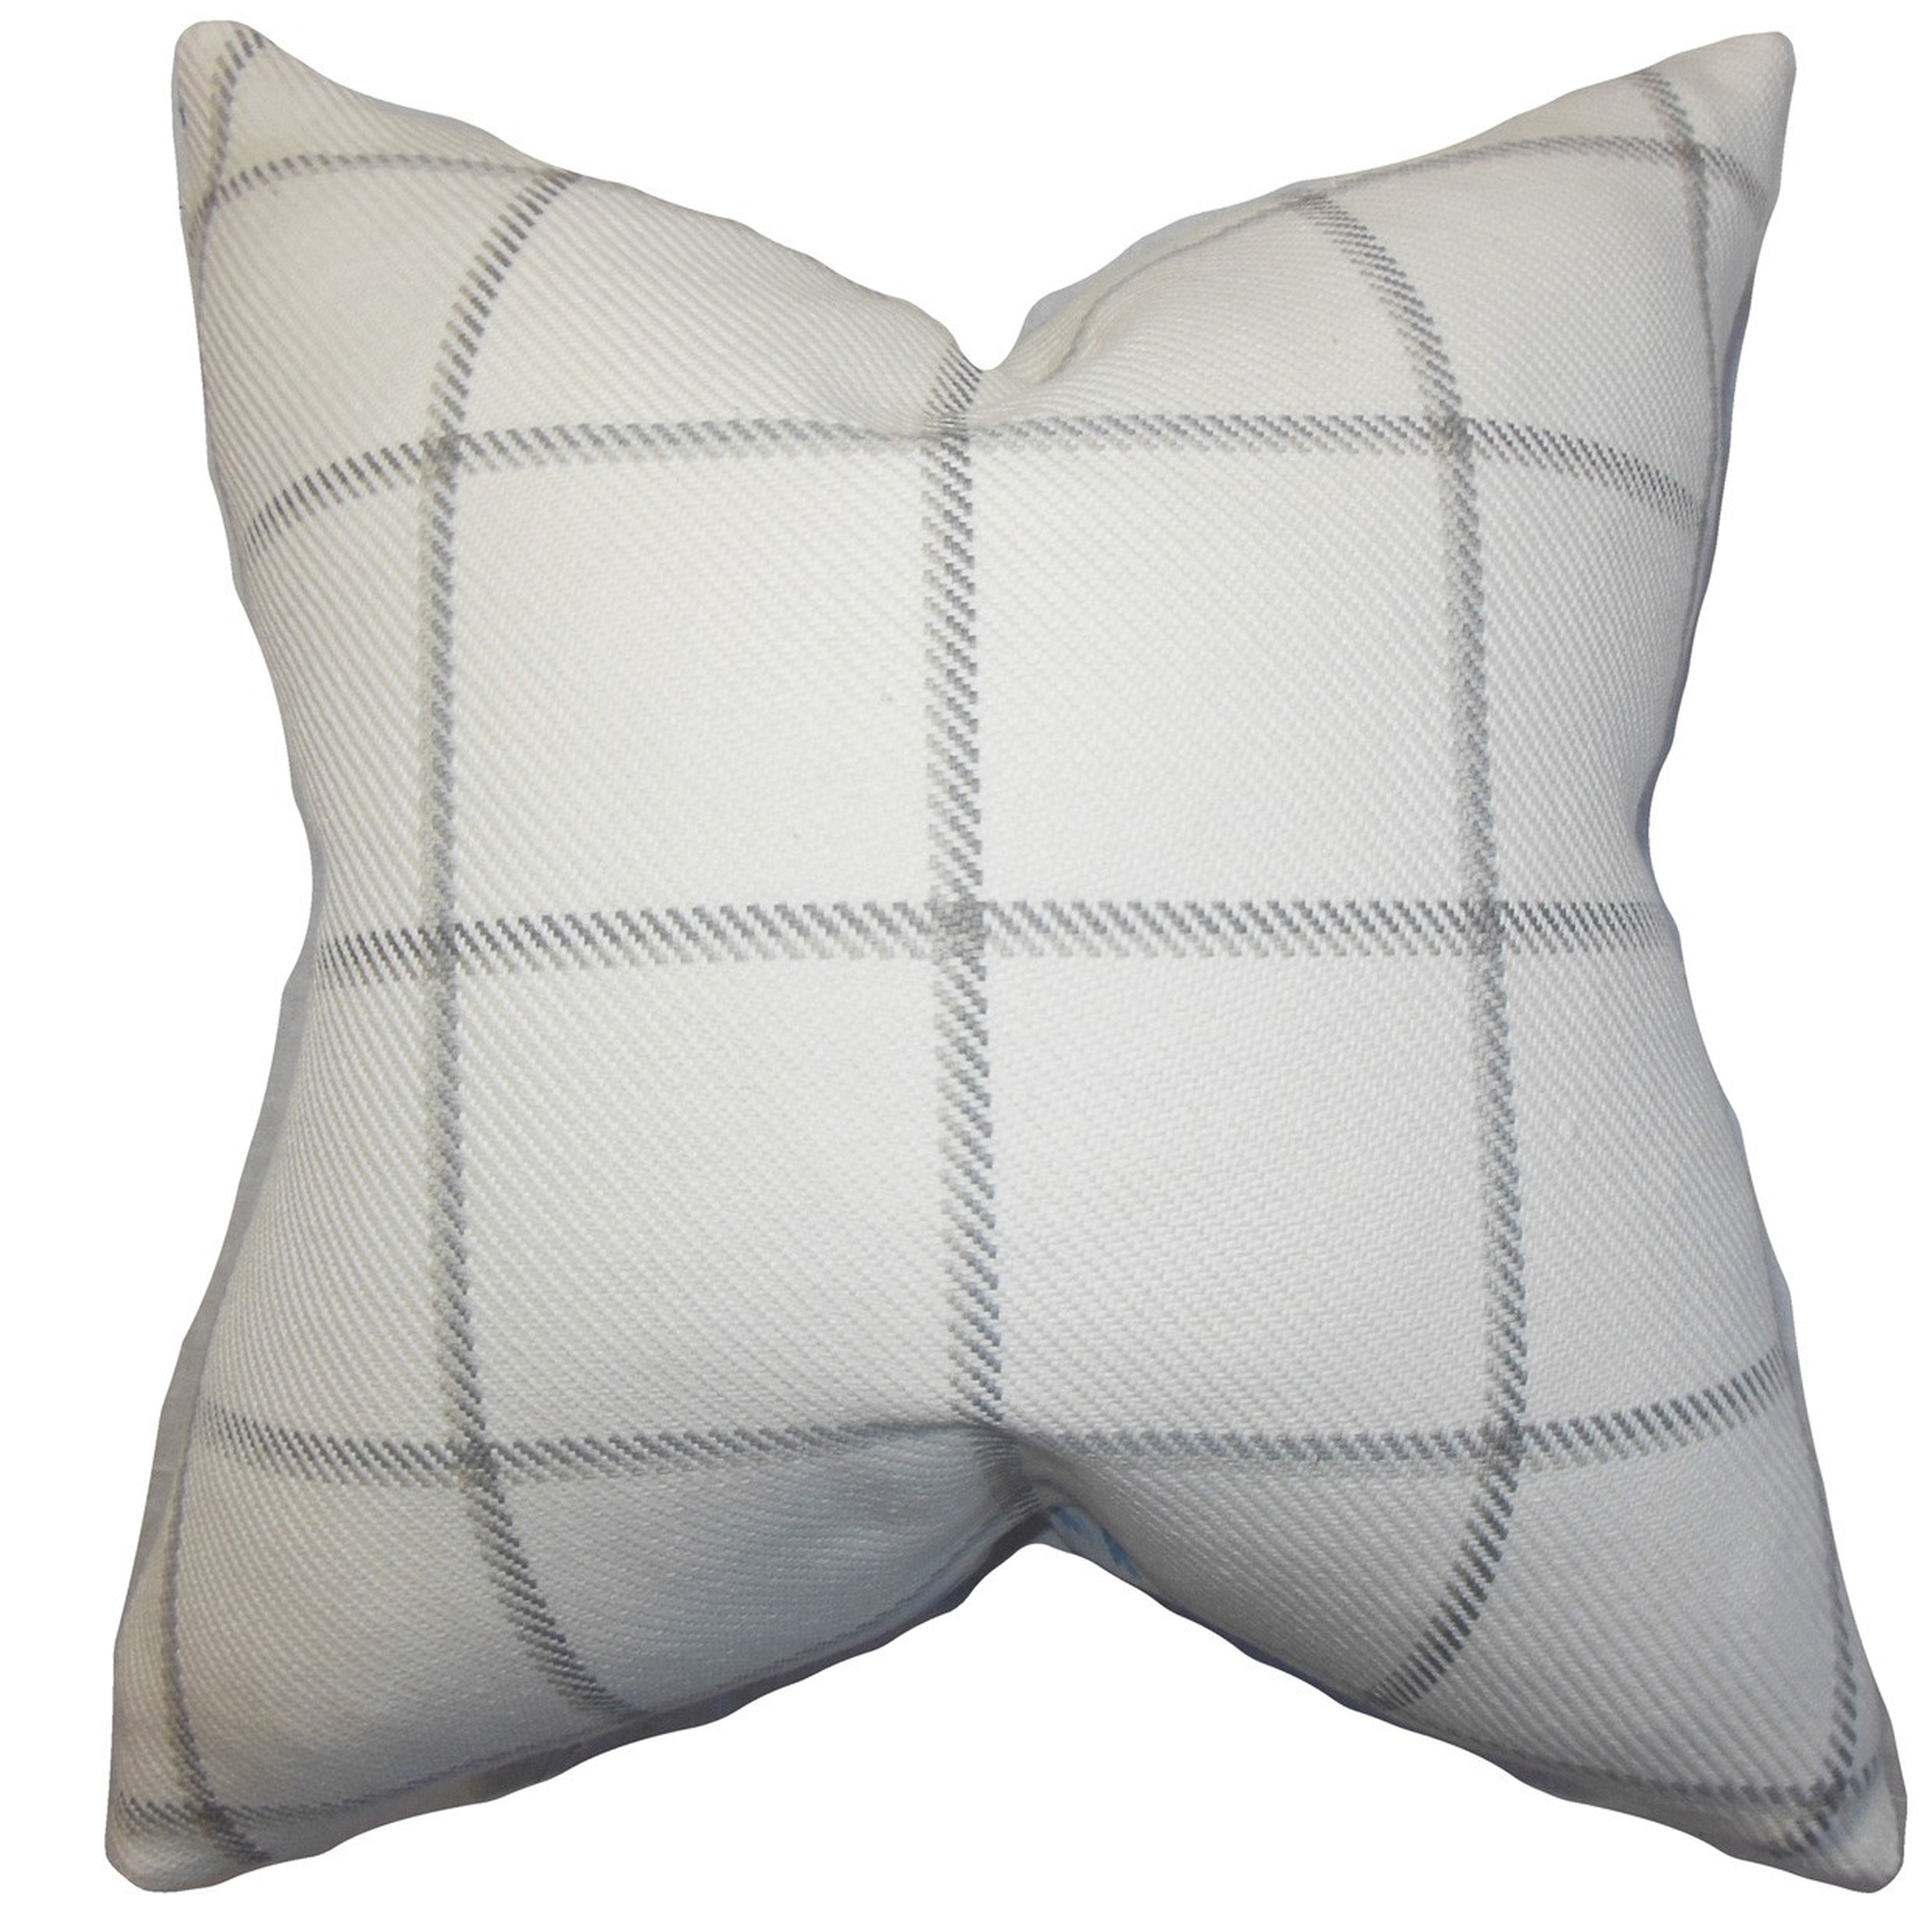 Wilmie Plaid Pillow - 20" x 20" - Down insert - Linen & Seam